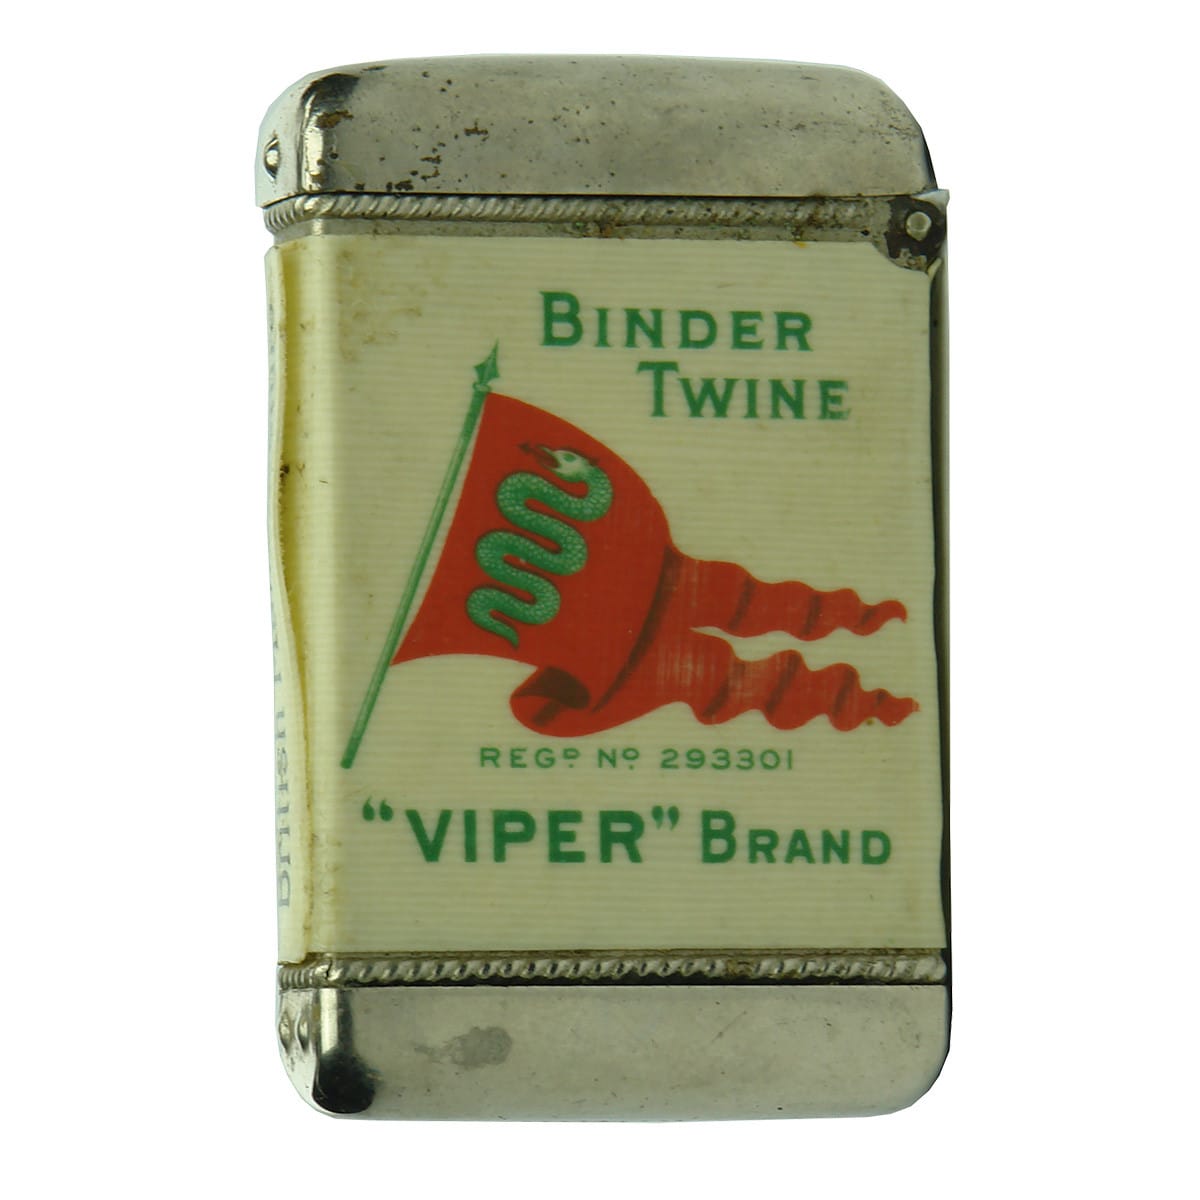 Tobacciana. Binder Twine, Red Star Brand, "Viper" Brand. Celluloid Vesta Case. (United Kingdom)